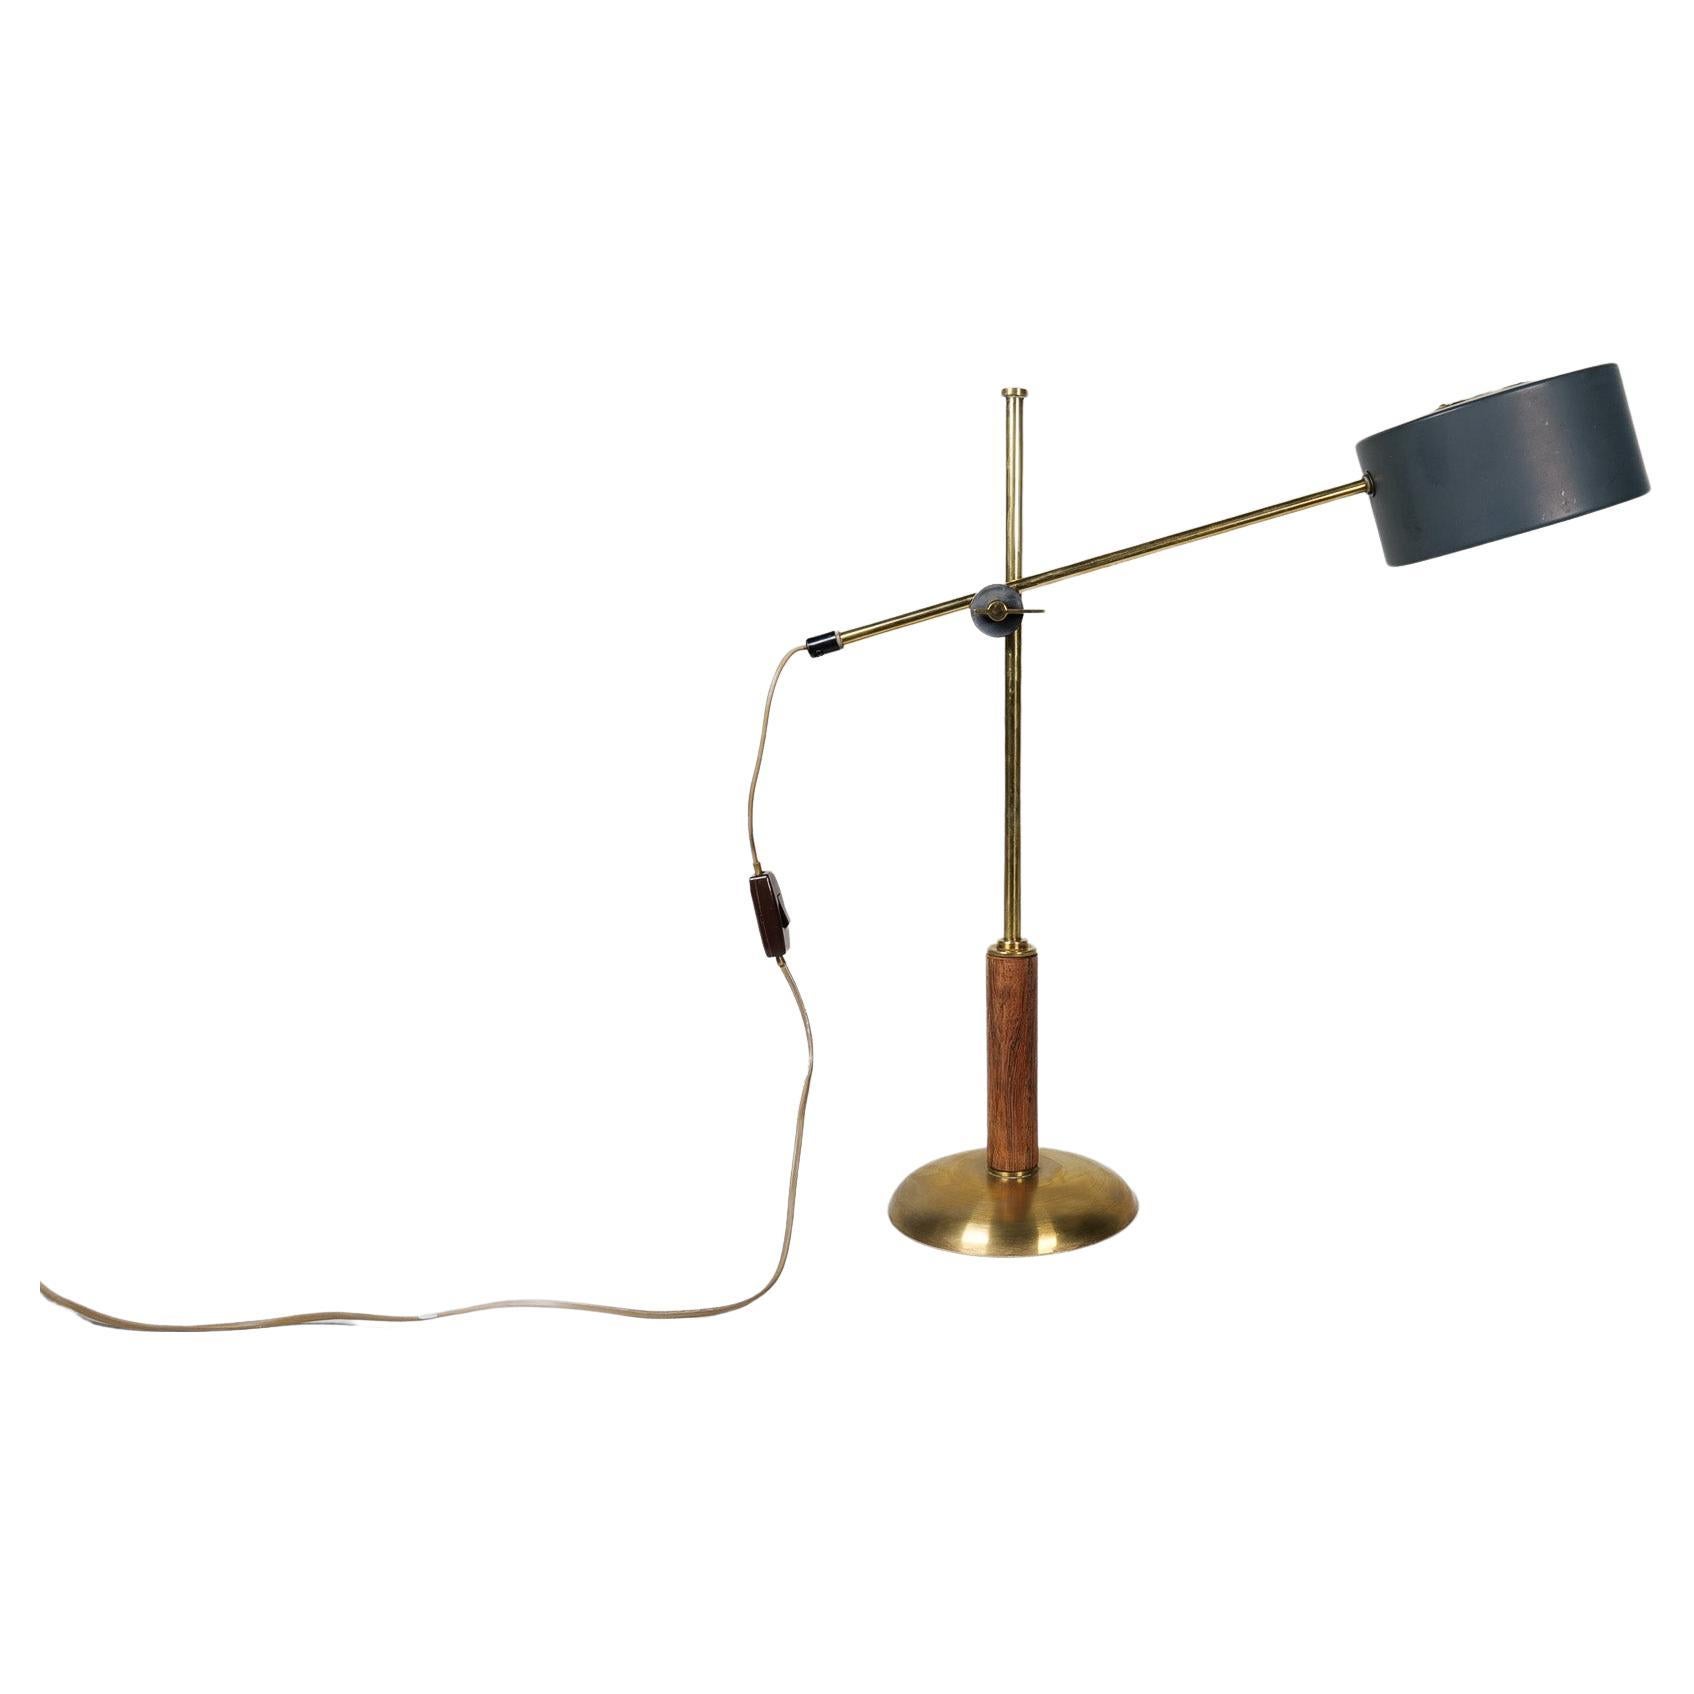 Midcentury Modern Rare Brass and Walnut Table Lamp by Einar Bäckström, Sweden For Sale